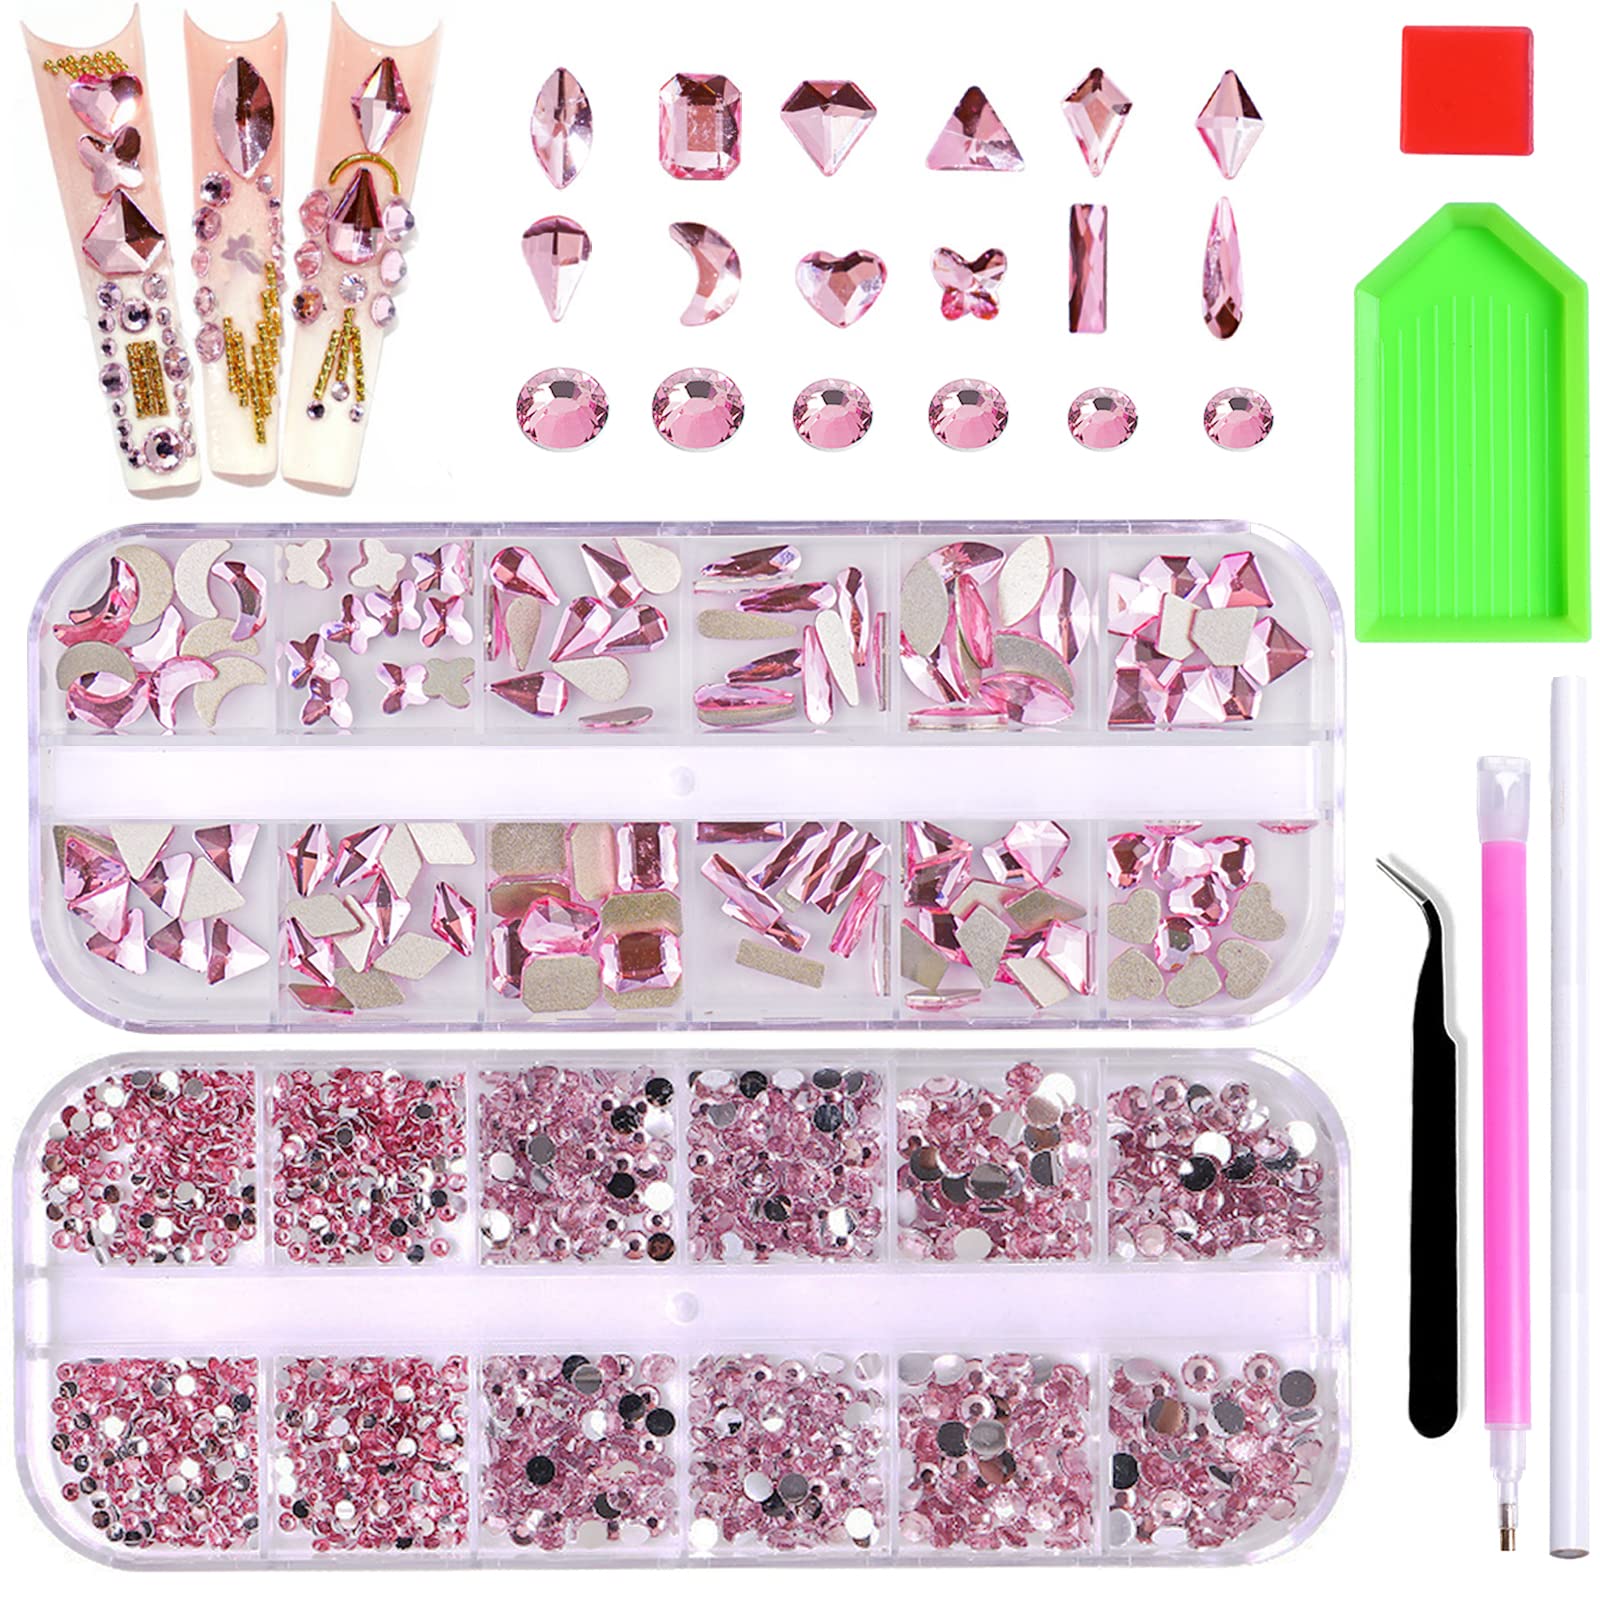  Kikonoke 75g Mix Resin Pearls Rhinestones Kit, 3-10mm Half  Pearls and 2-6mm Flatback Rhinestones for Nail Art Decoration Shoes Clothes  Tumblers Scrapbooking Craft DIY (Pink)